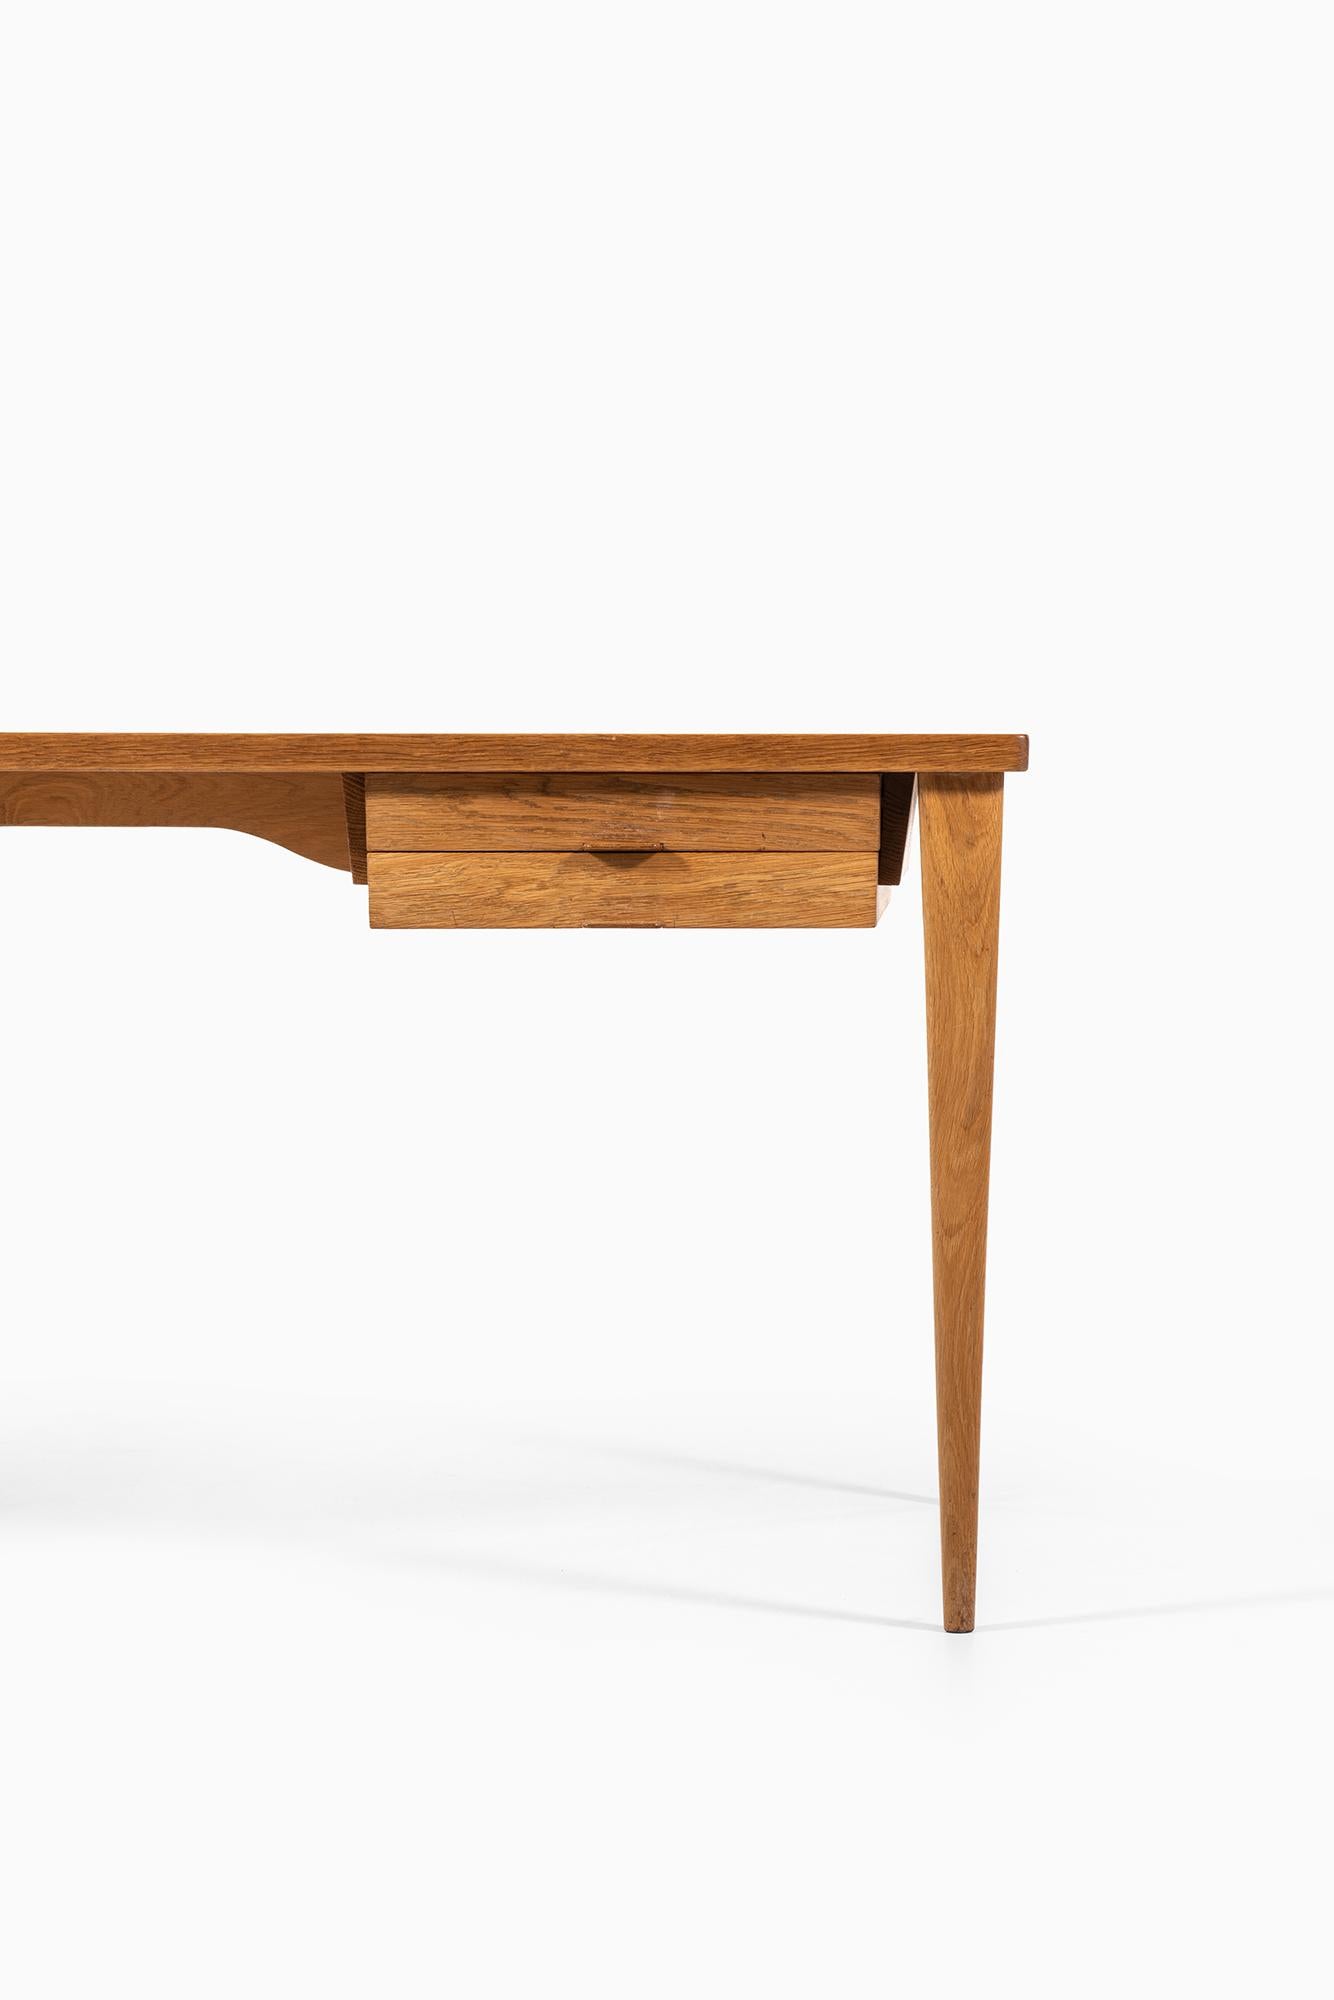 Very rare freestanding desk designed by Nanna Ditzel. Produced by Poul Kolds Savværk in Denmark.